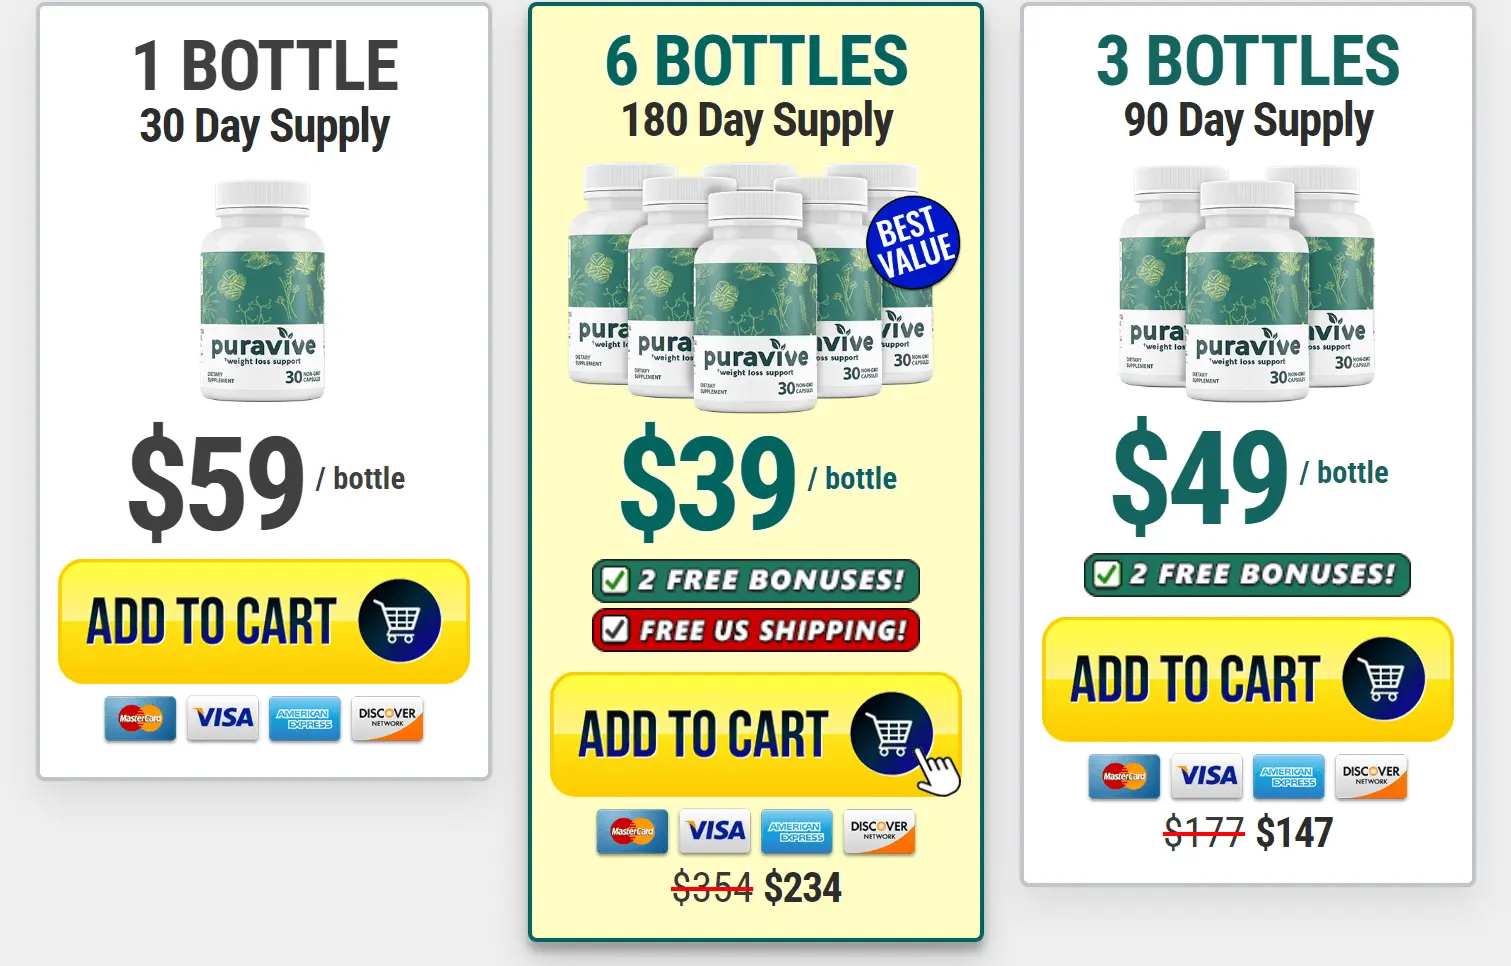 Puravive bottle pricing